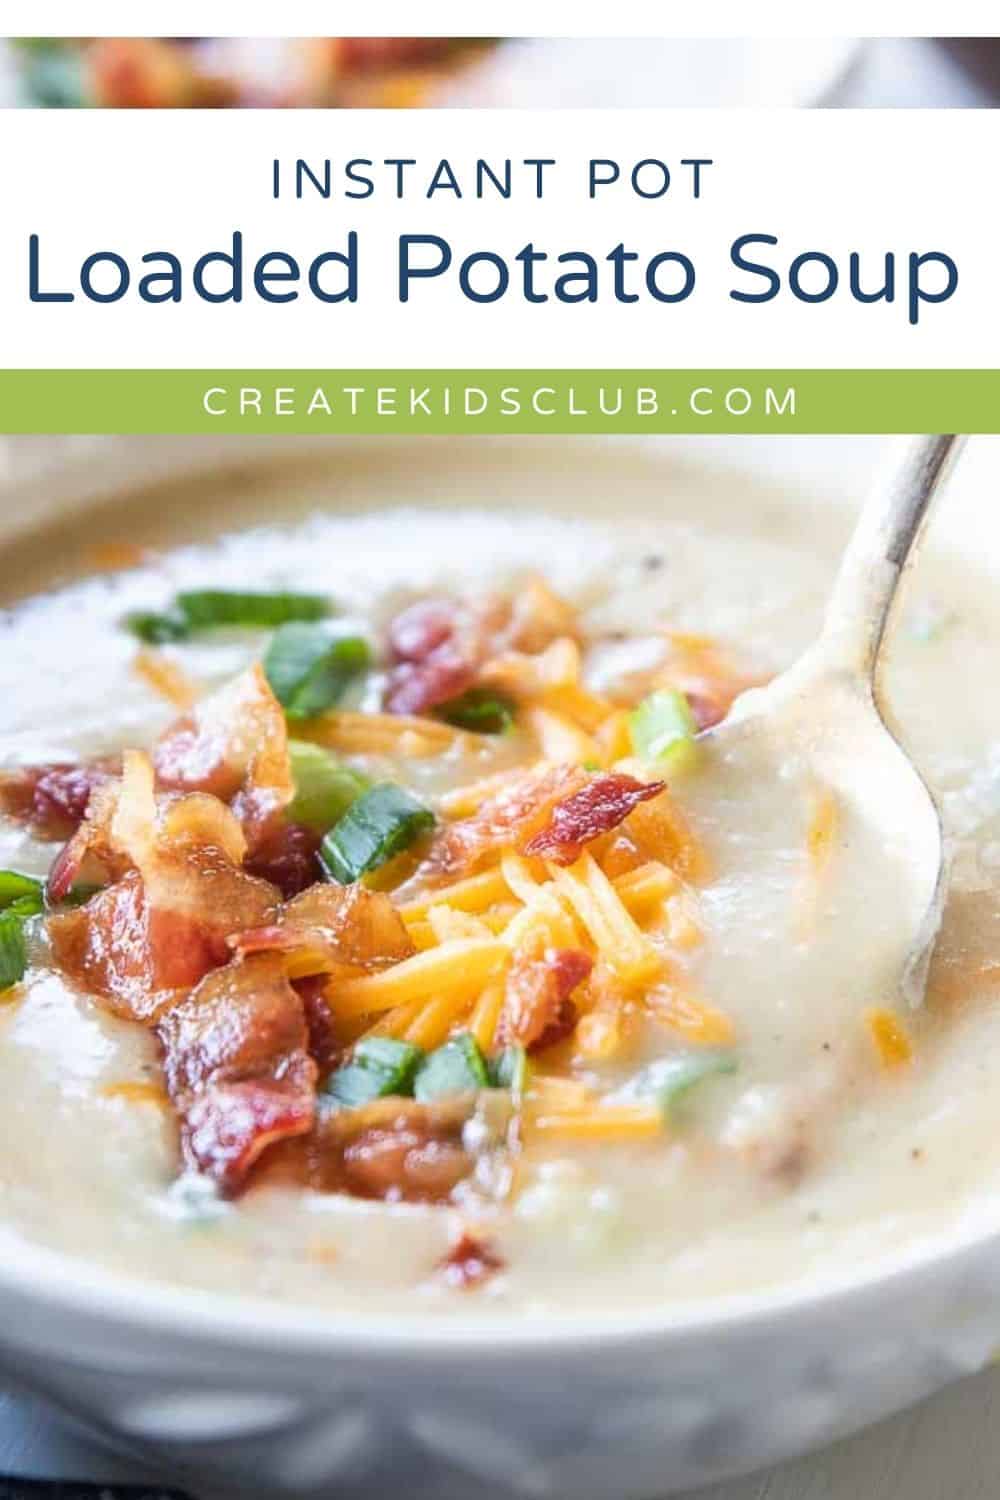 Pin showing instant pot loaded potato soup.